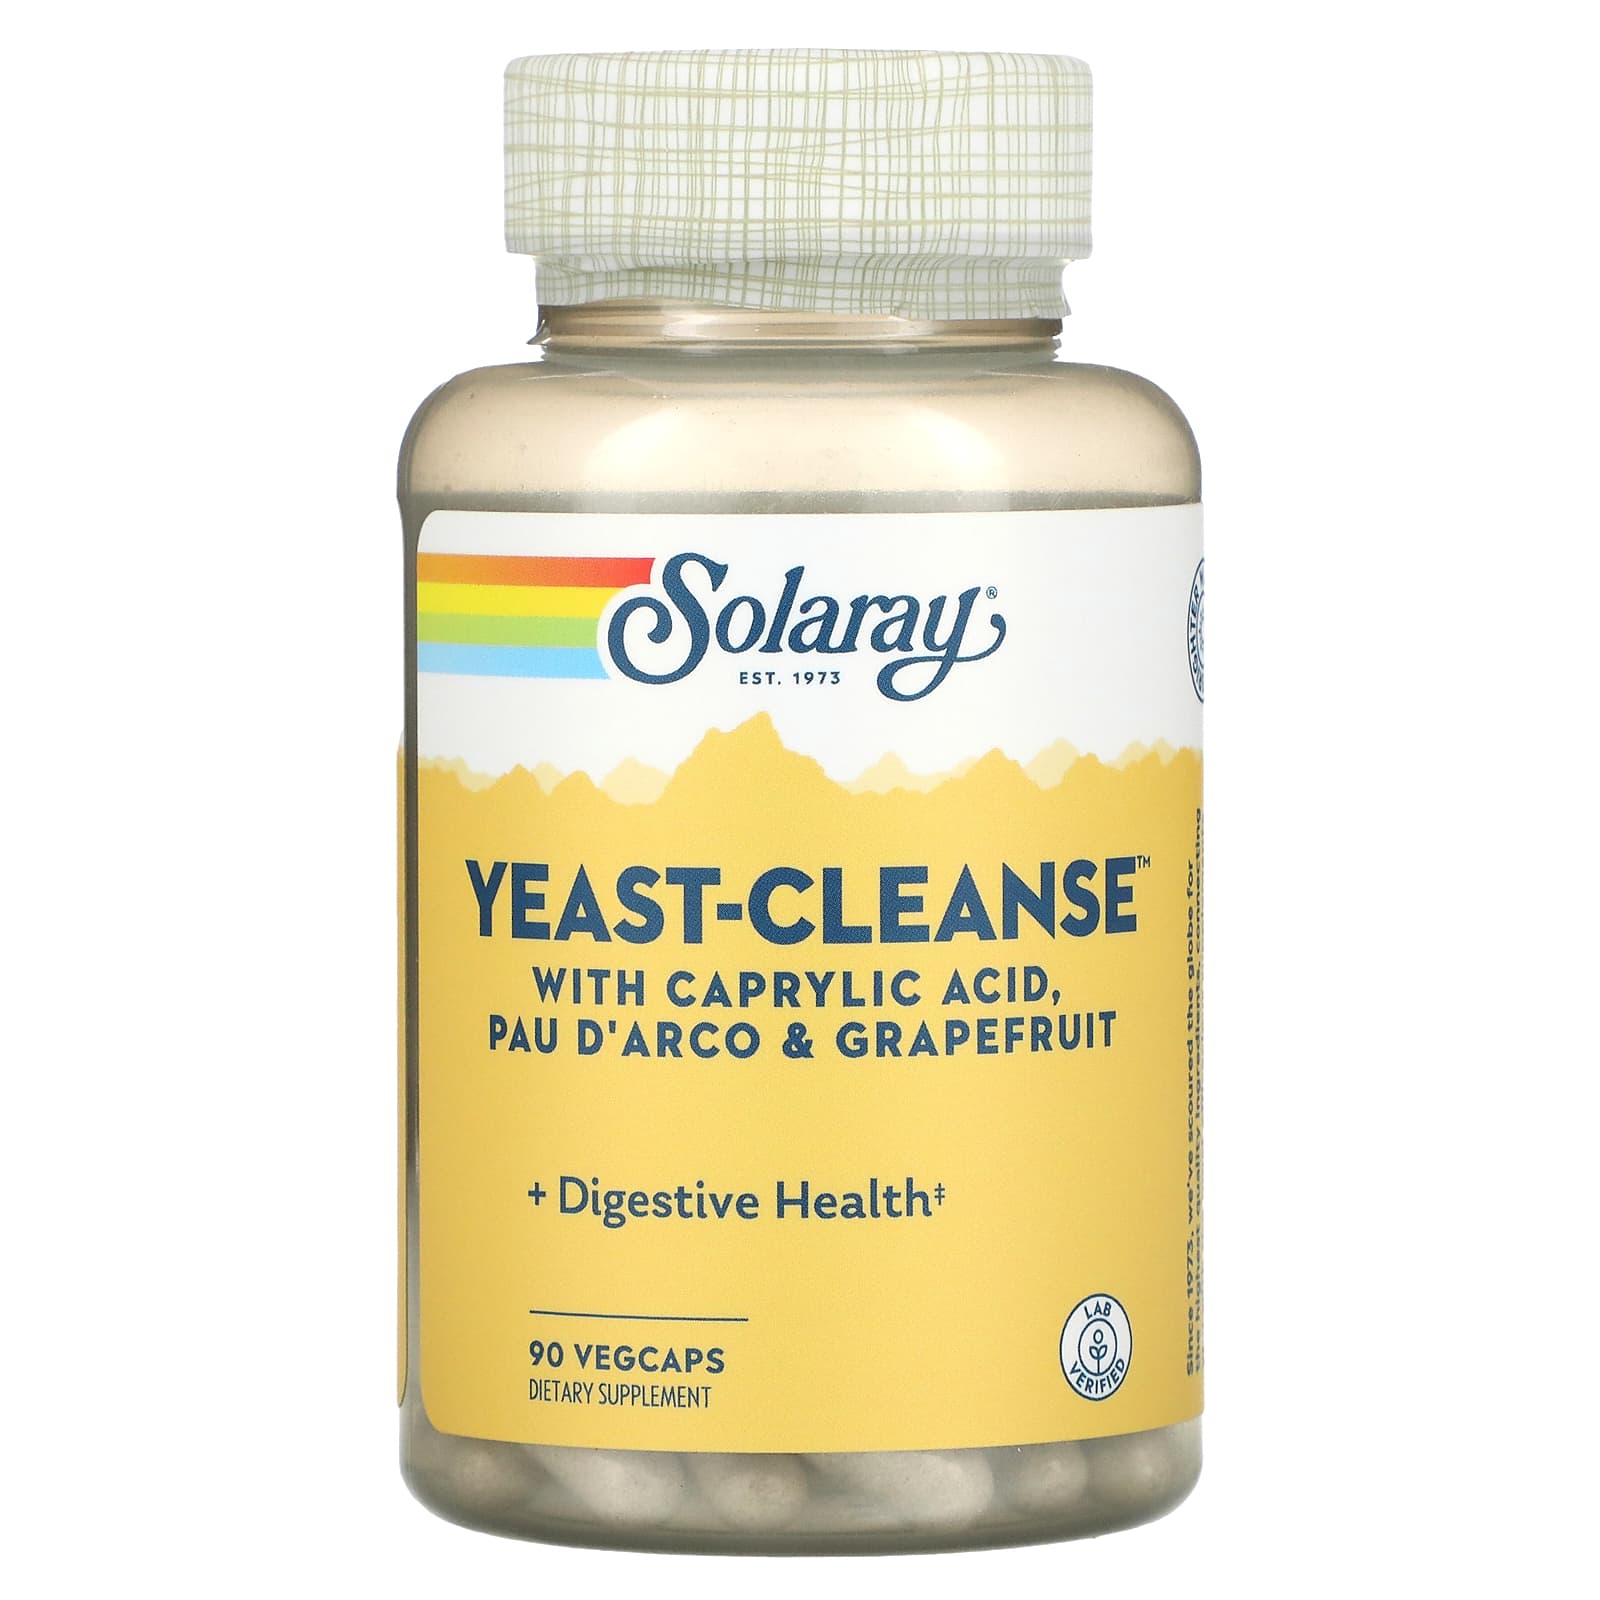 Yeast-Cleanse (90 Capsules)